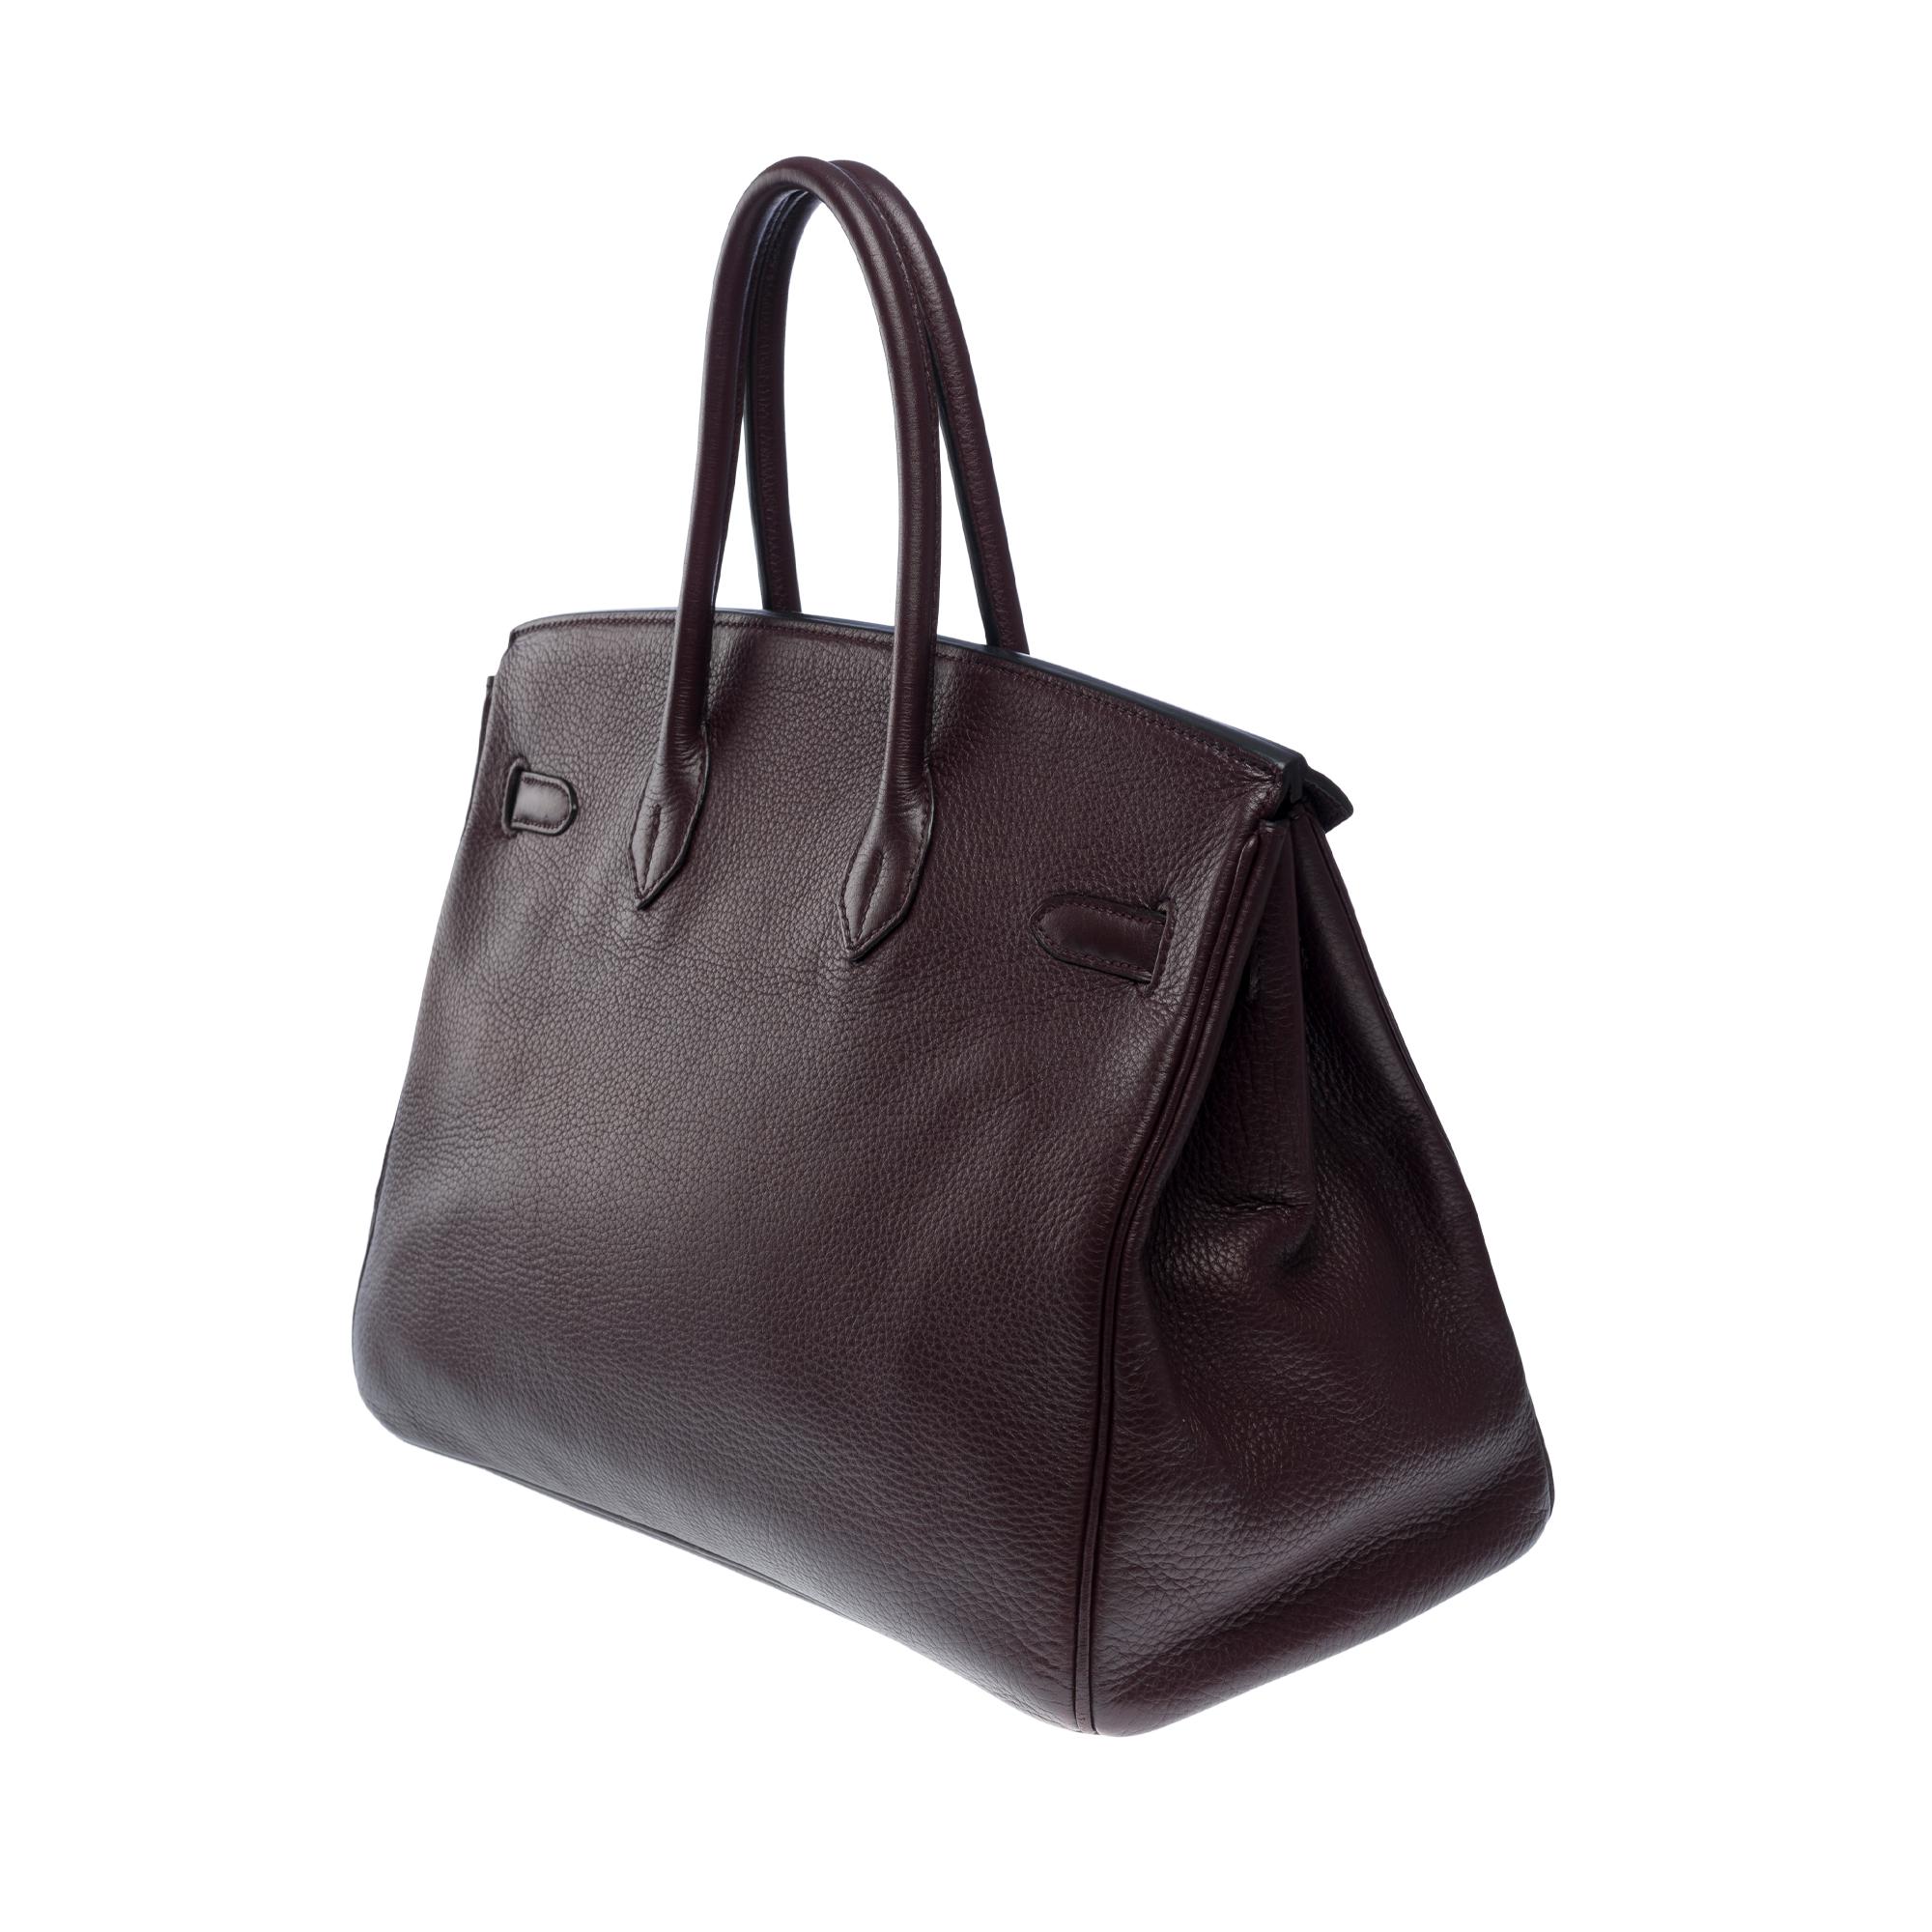 Amazing Hermès Birkin 35 handbag in Togo Raisin leather, SHW For Sale 1